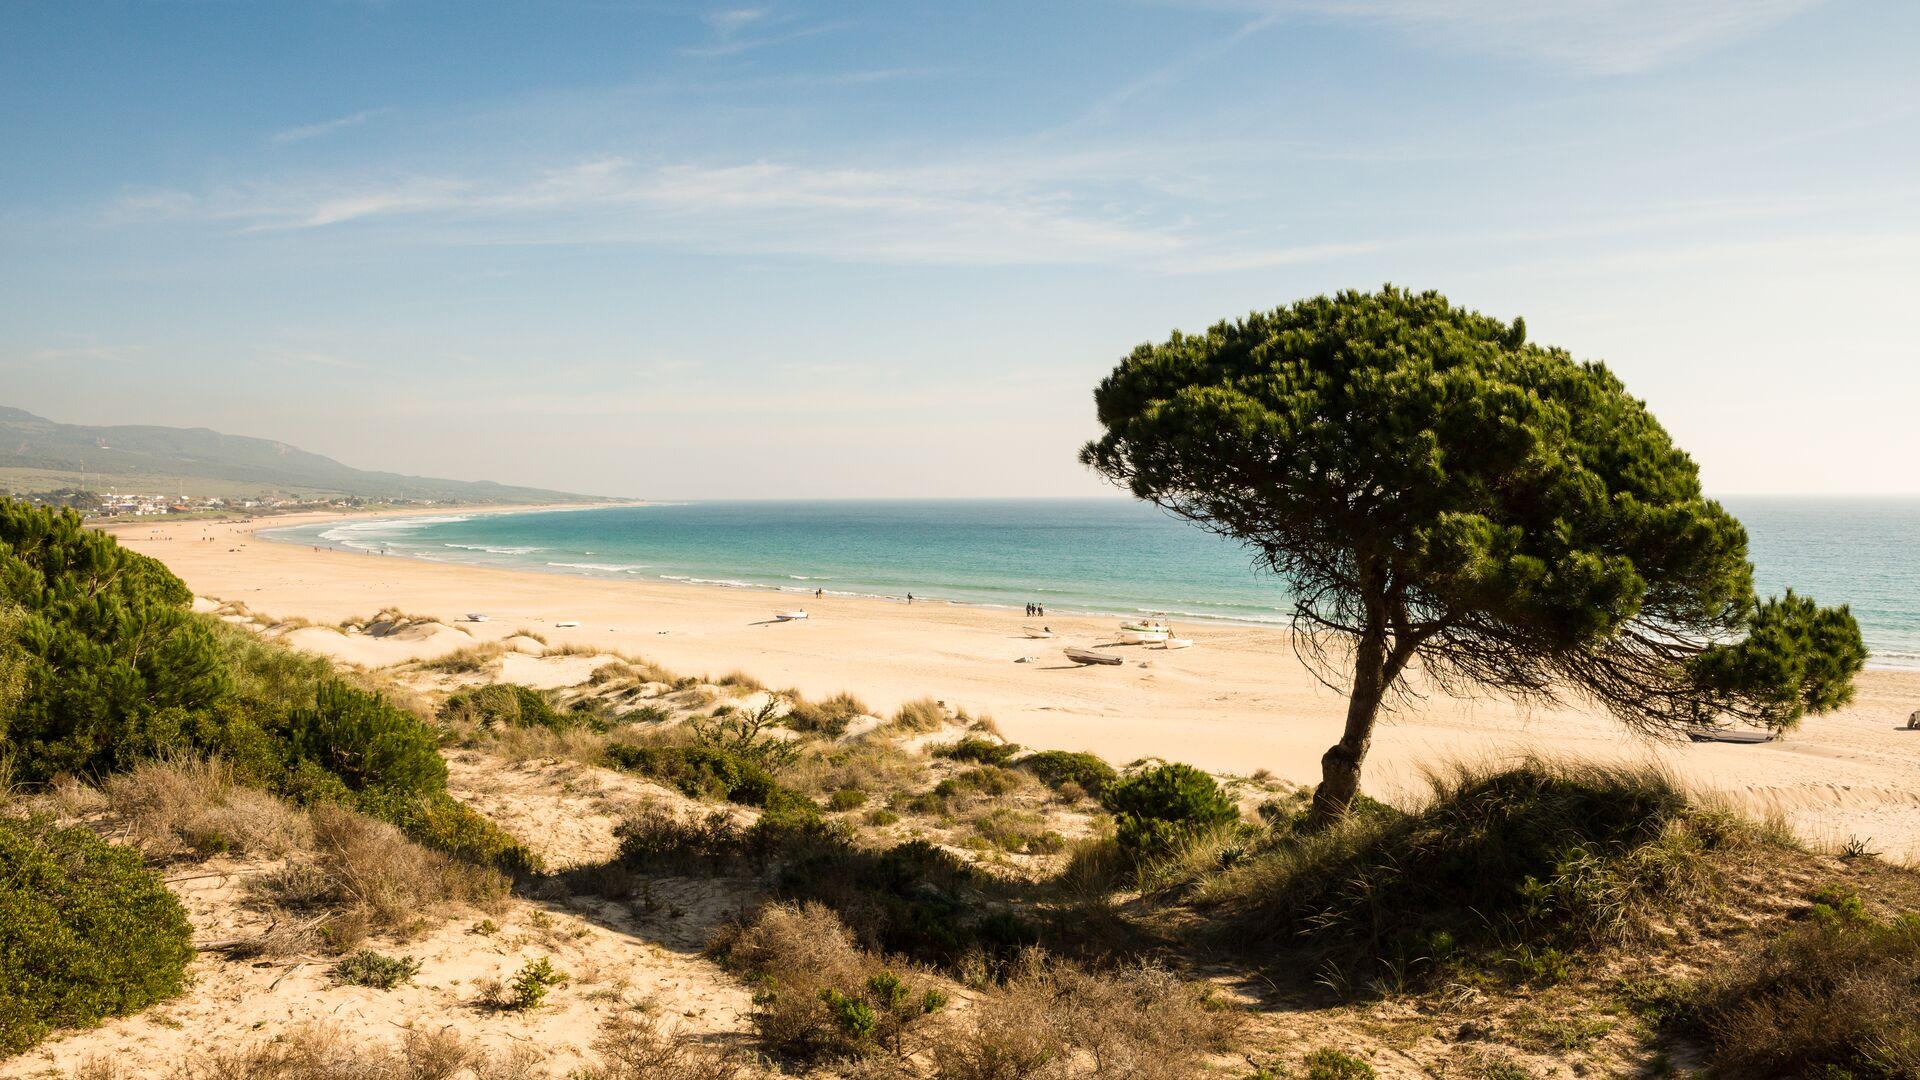 Bolonia beach close to Tarifa in Costa de la Luz, Andalusia, Southern Spain. Beautiful landscape of golden beach, coastal vegetation with stone pine tree. Turquoise Atlantic ocean,sunny winter day.